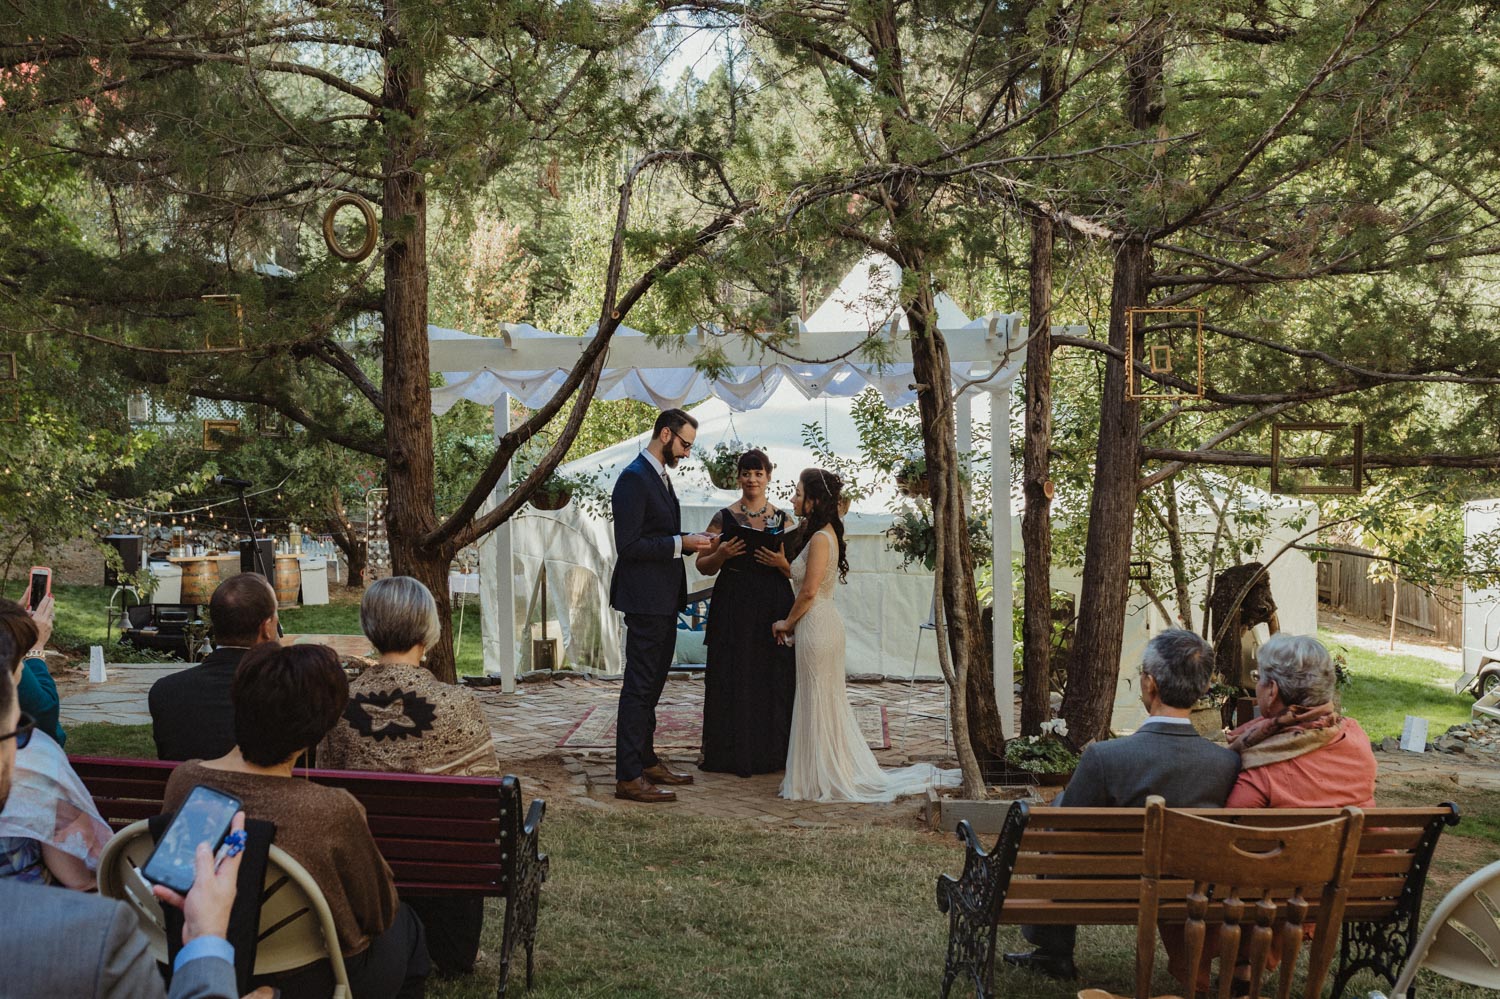 Nevada City wedding vows photo